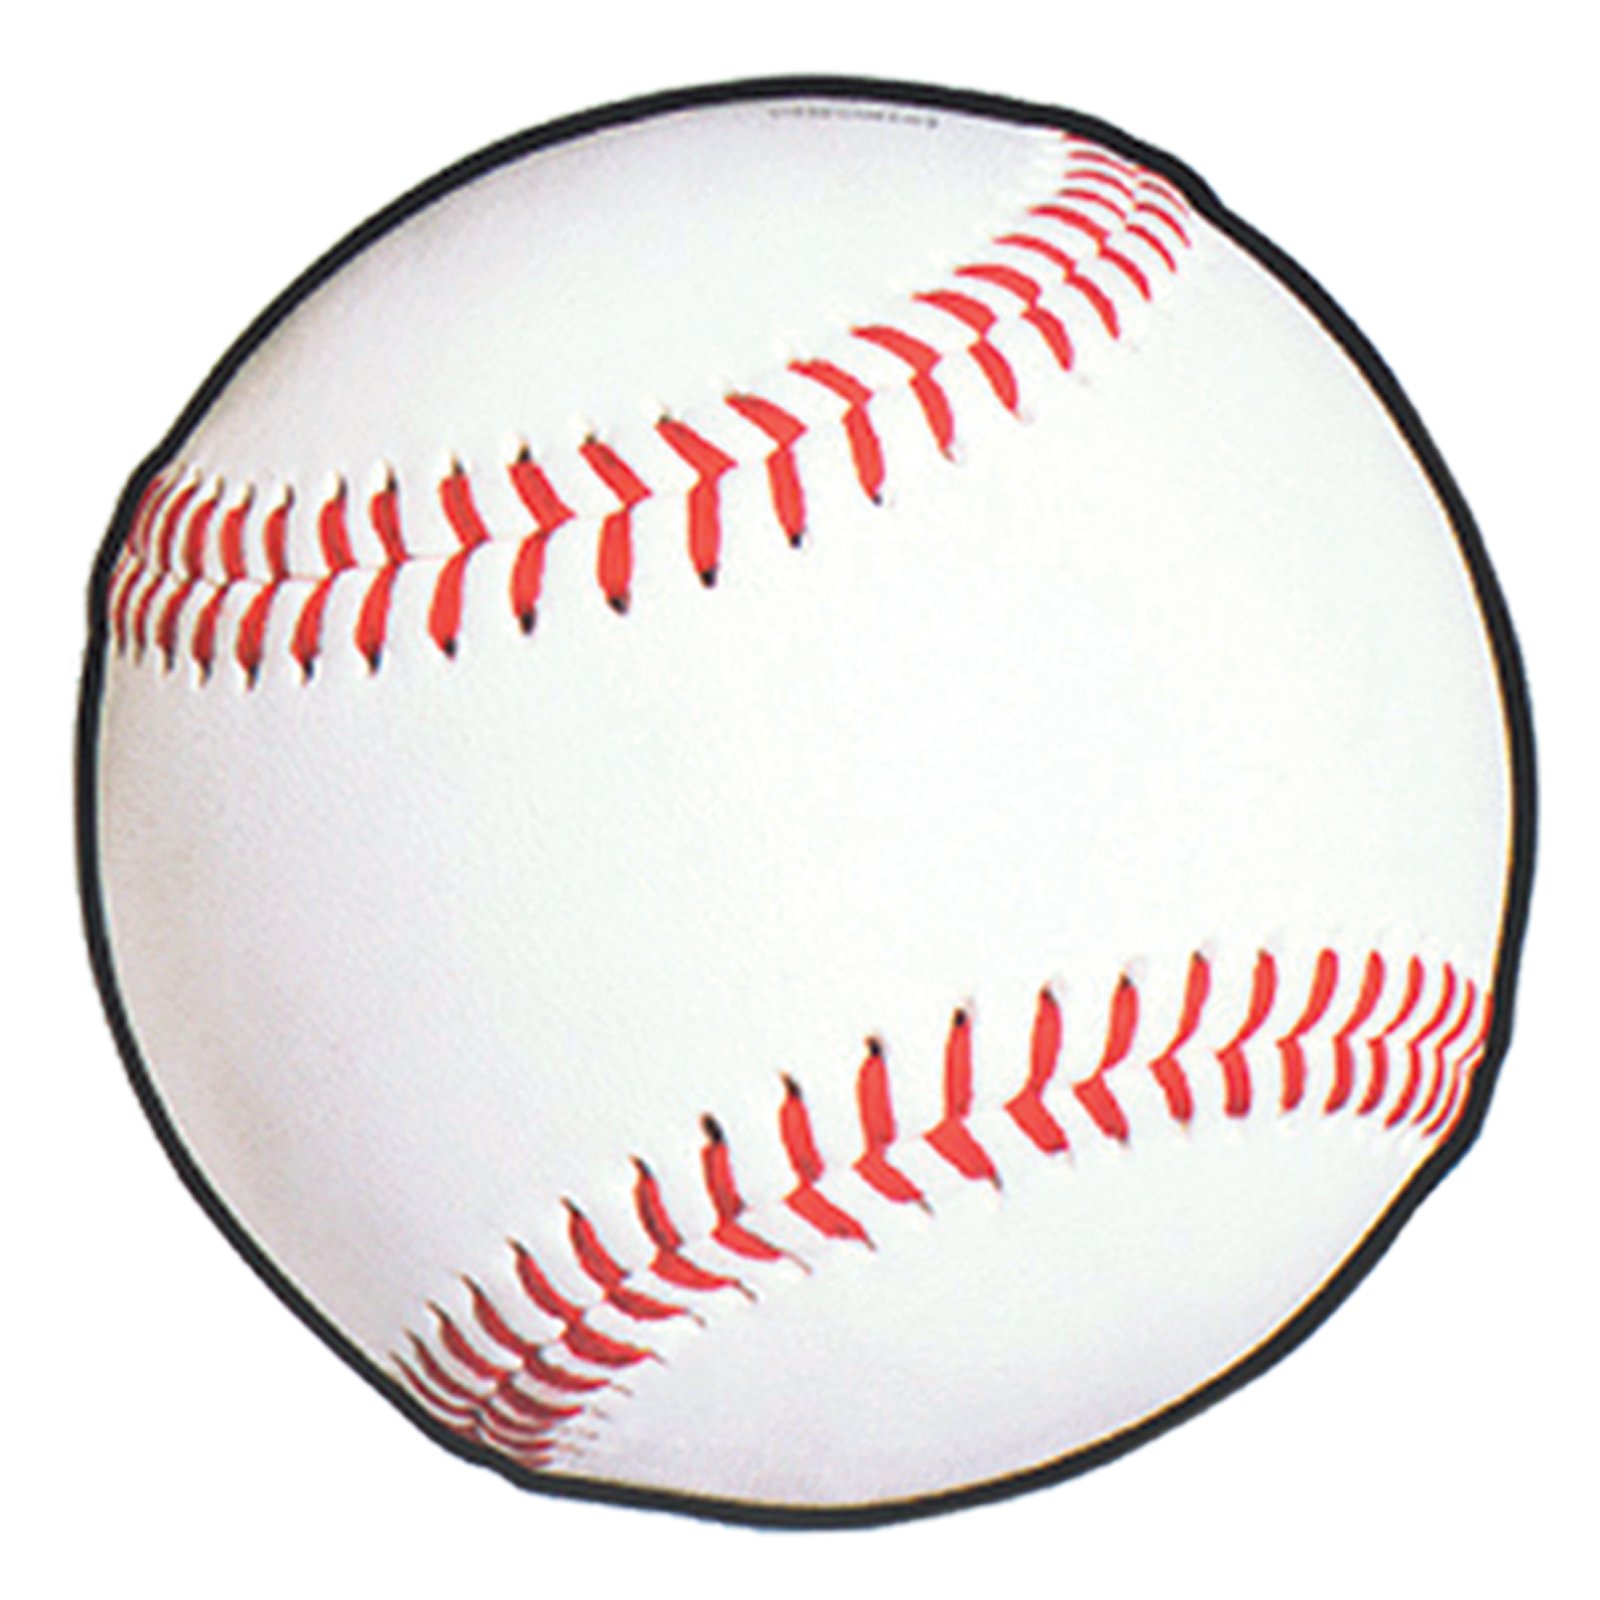 Free baseball clip art images